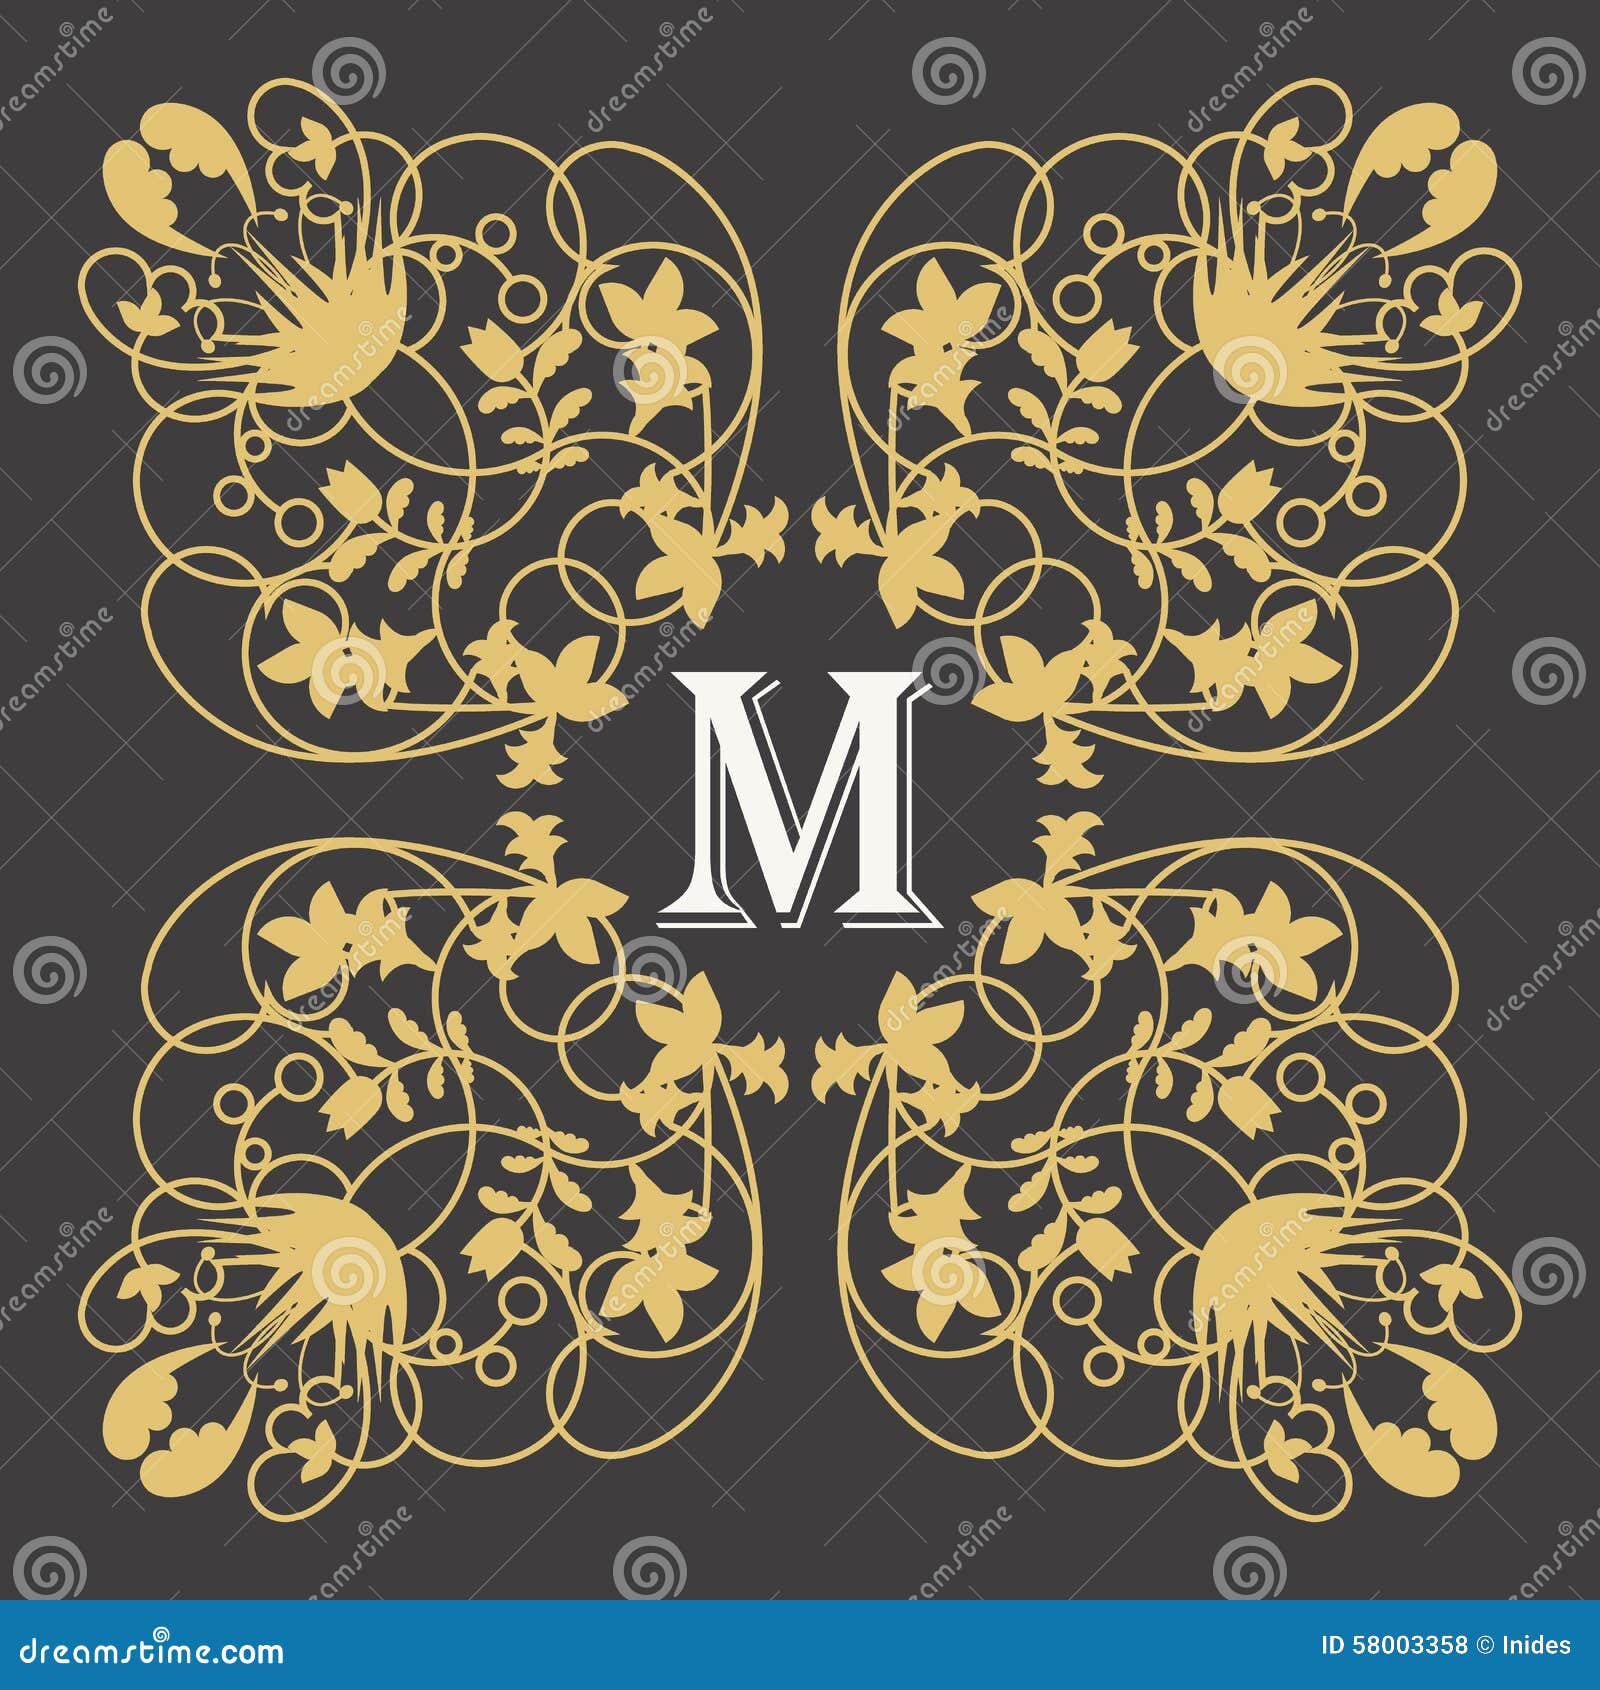 Gold Monogram Frame With Letter M On Dark Stock Vector - Illustration of element, design: 58003358